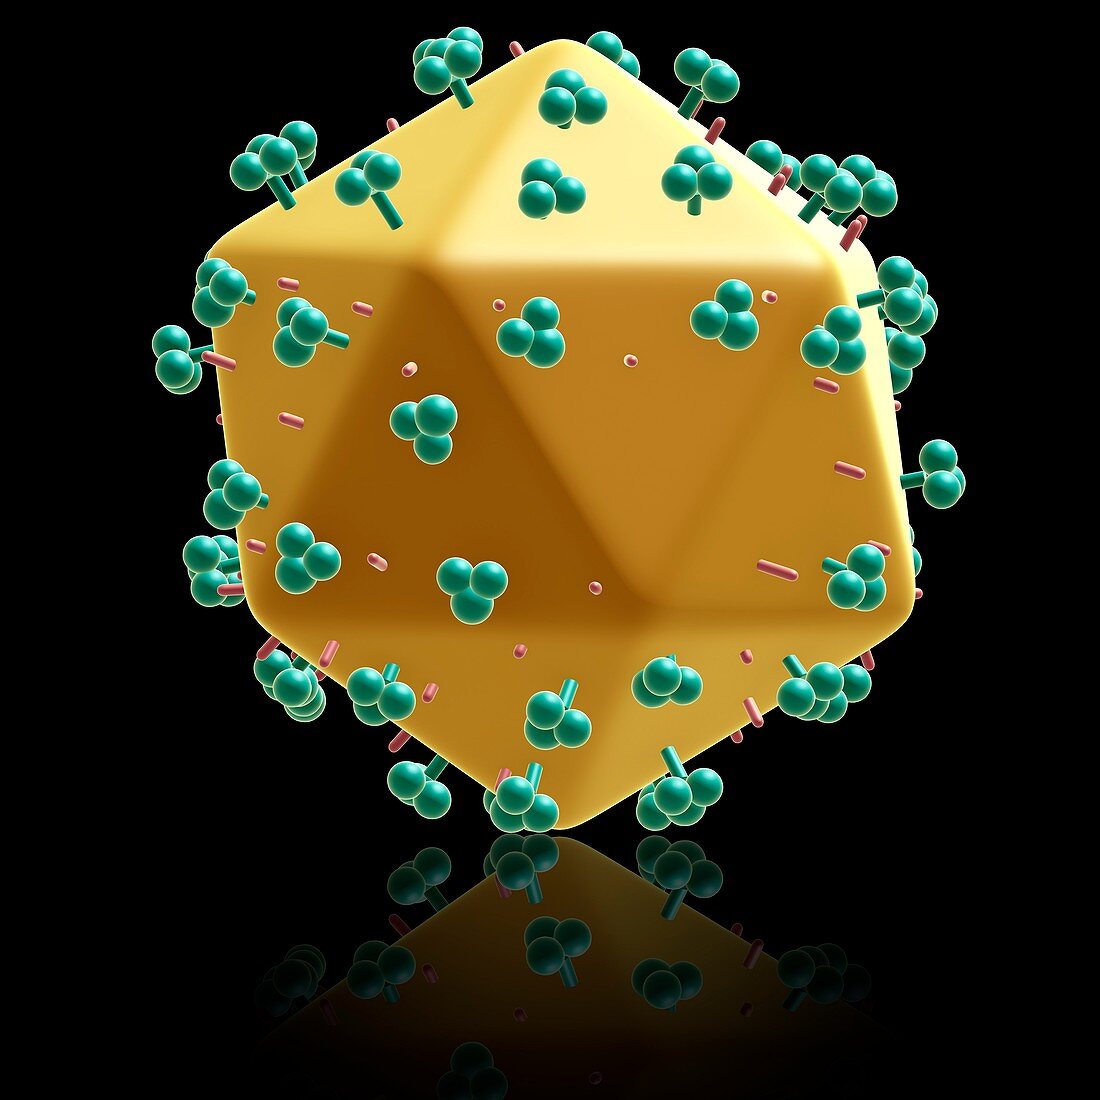 AIDS virus particle,illustration